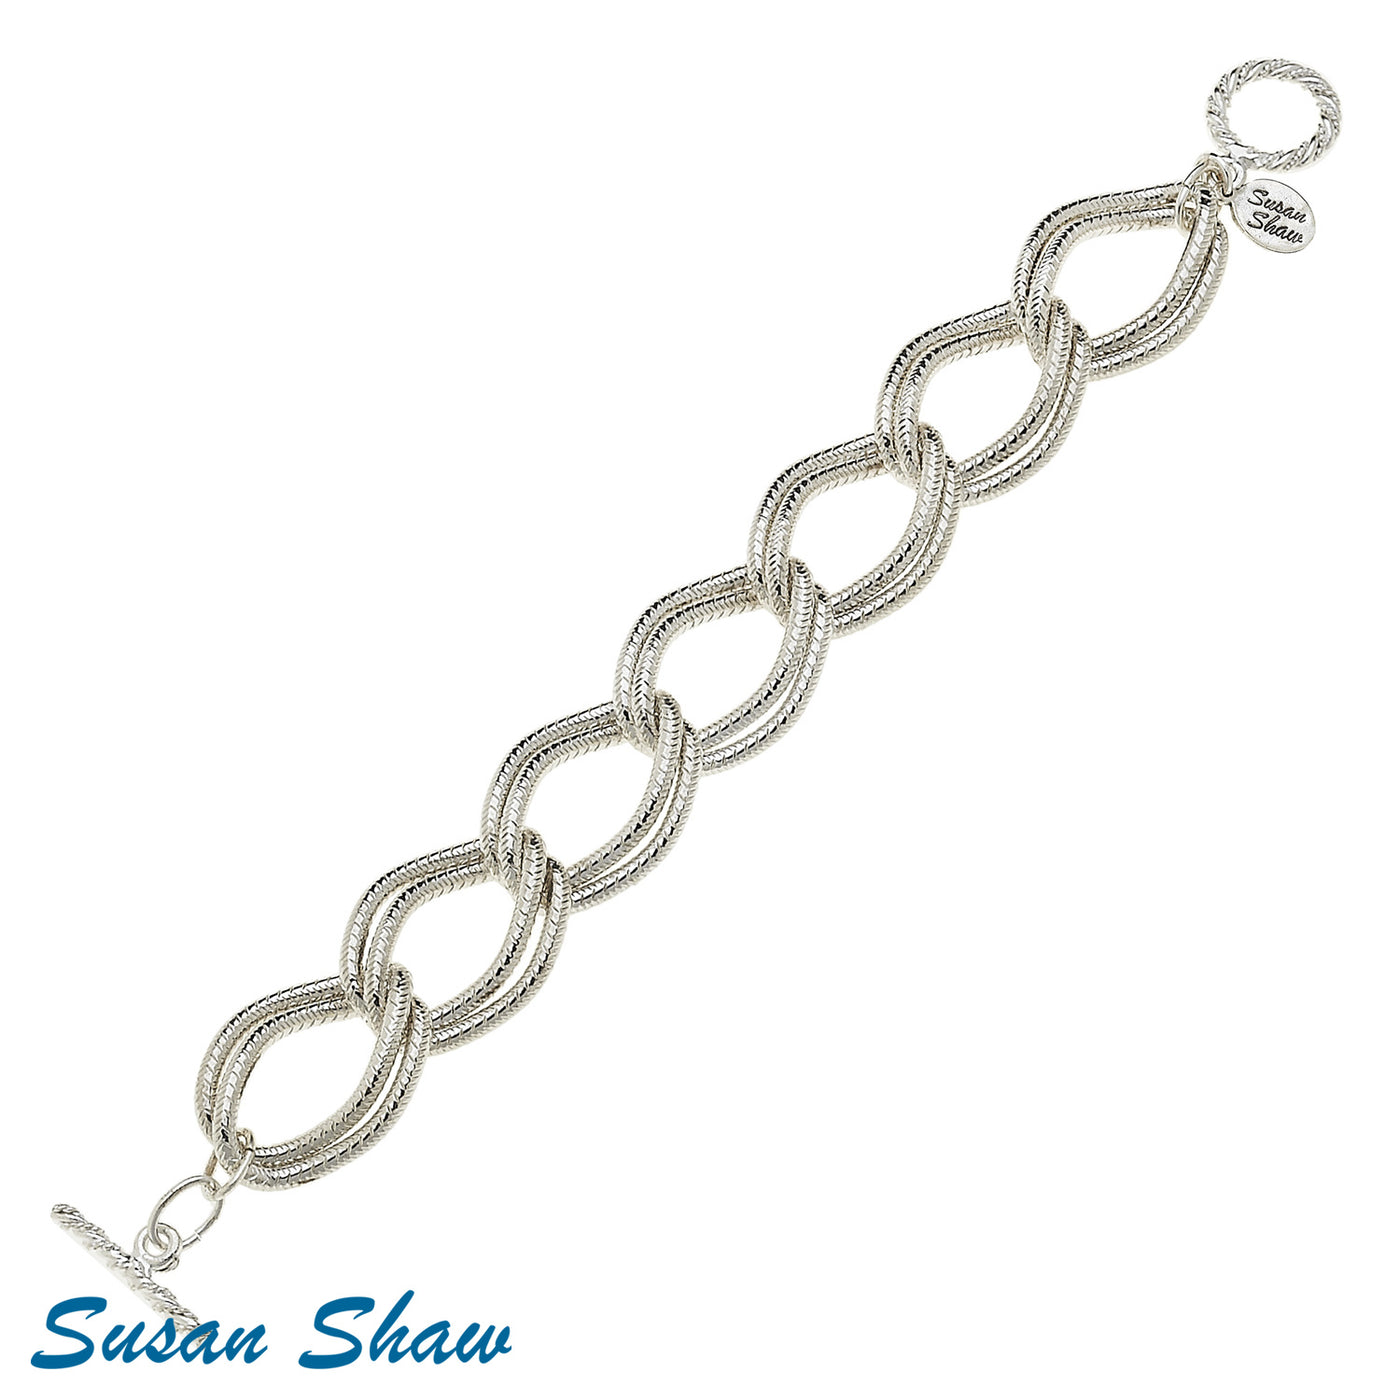 Textured Silver Bracelet - Susan Shaw